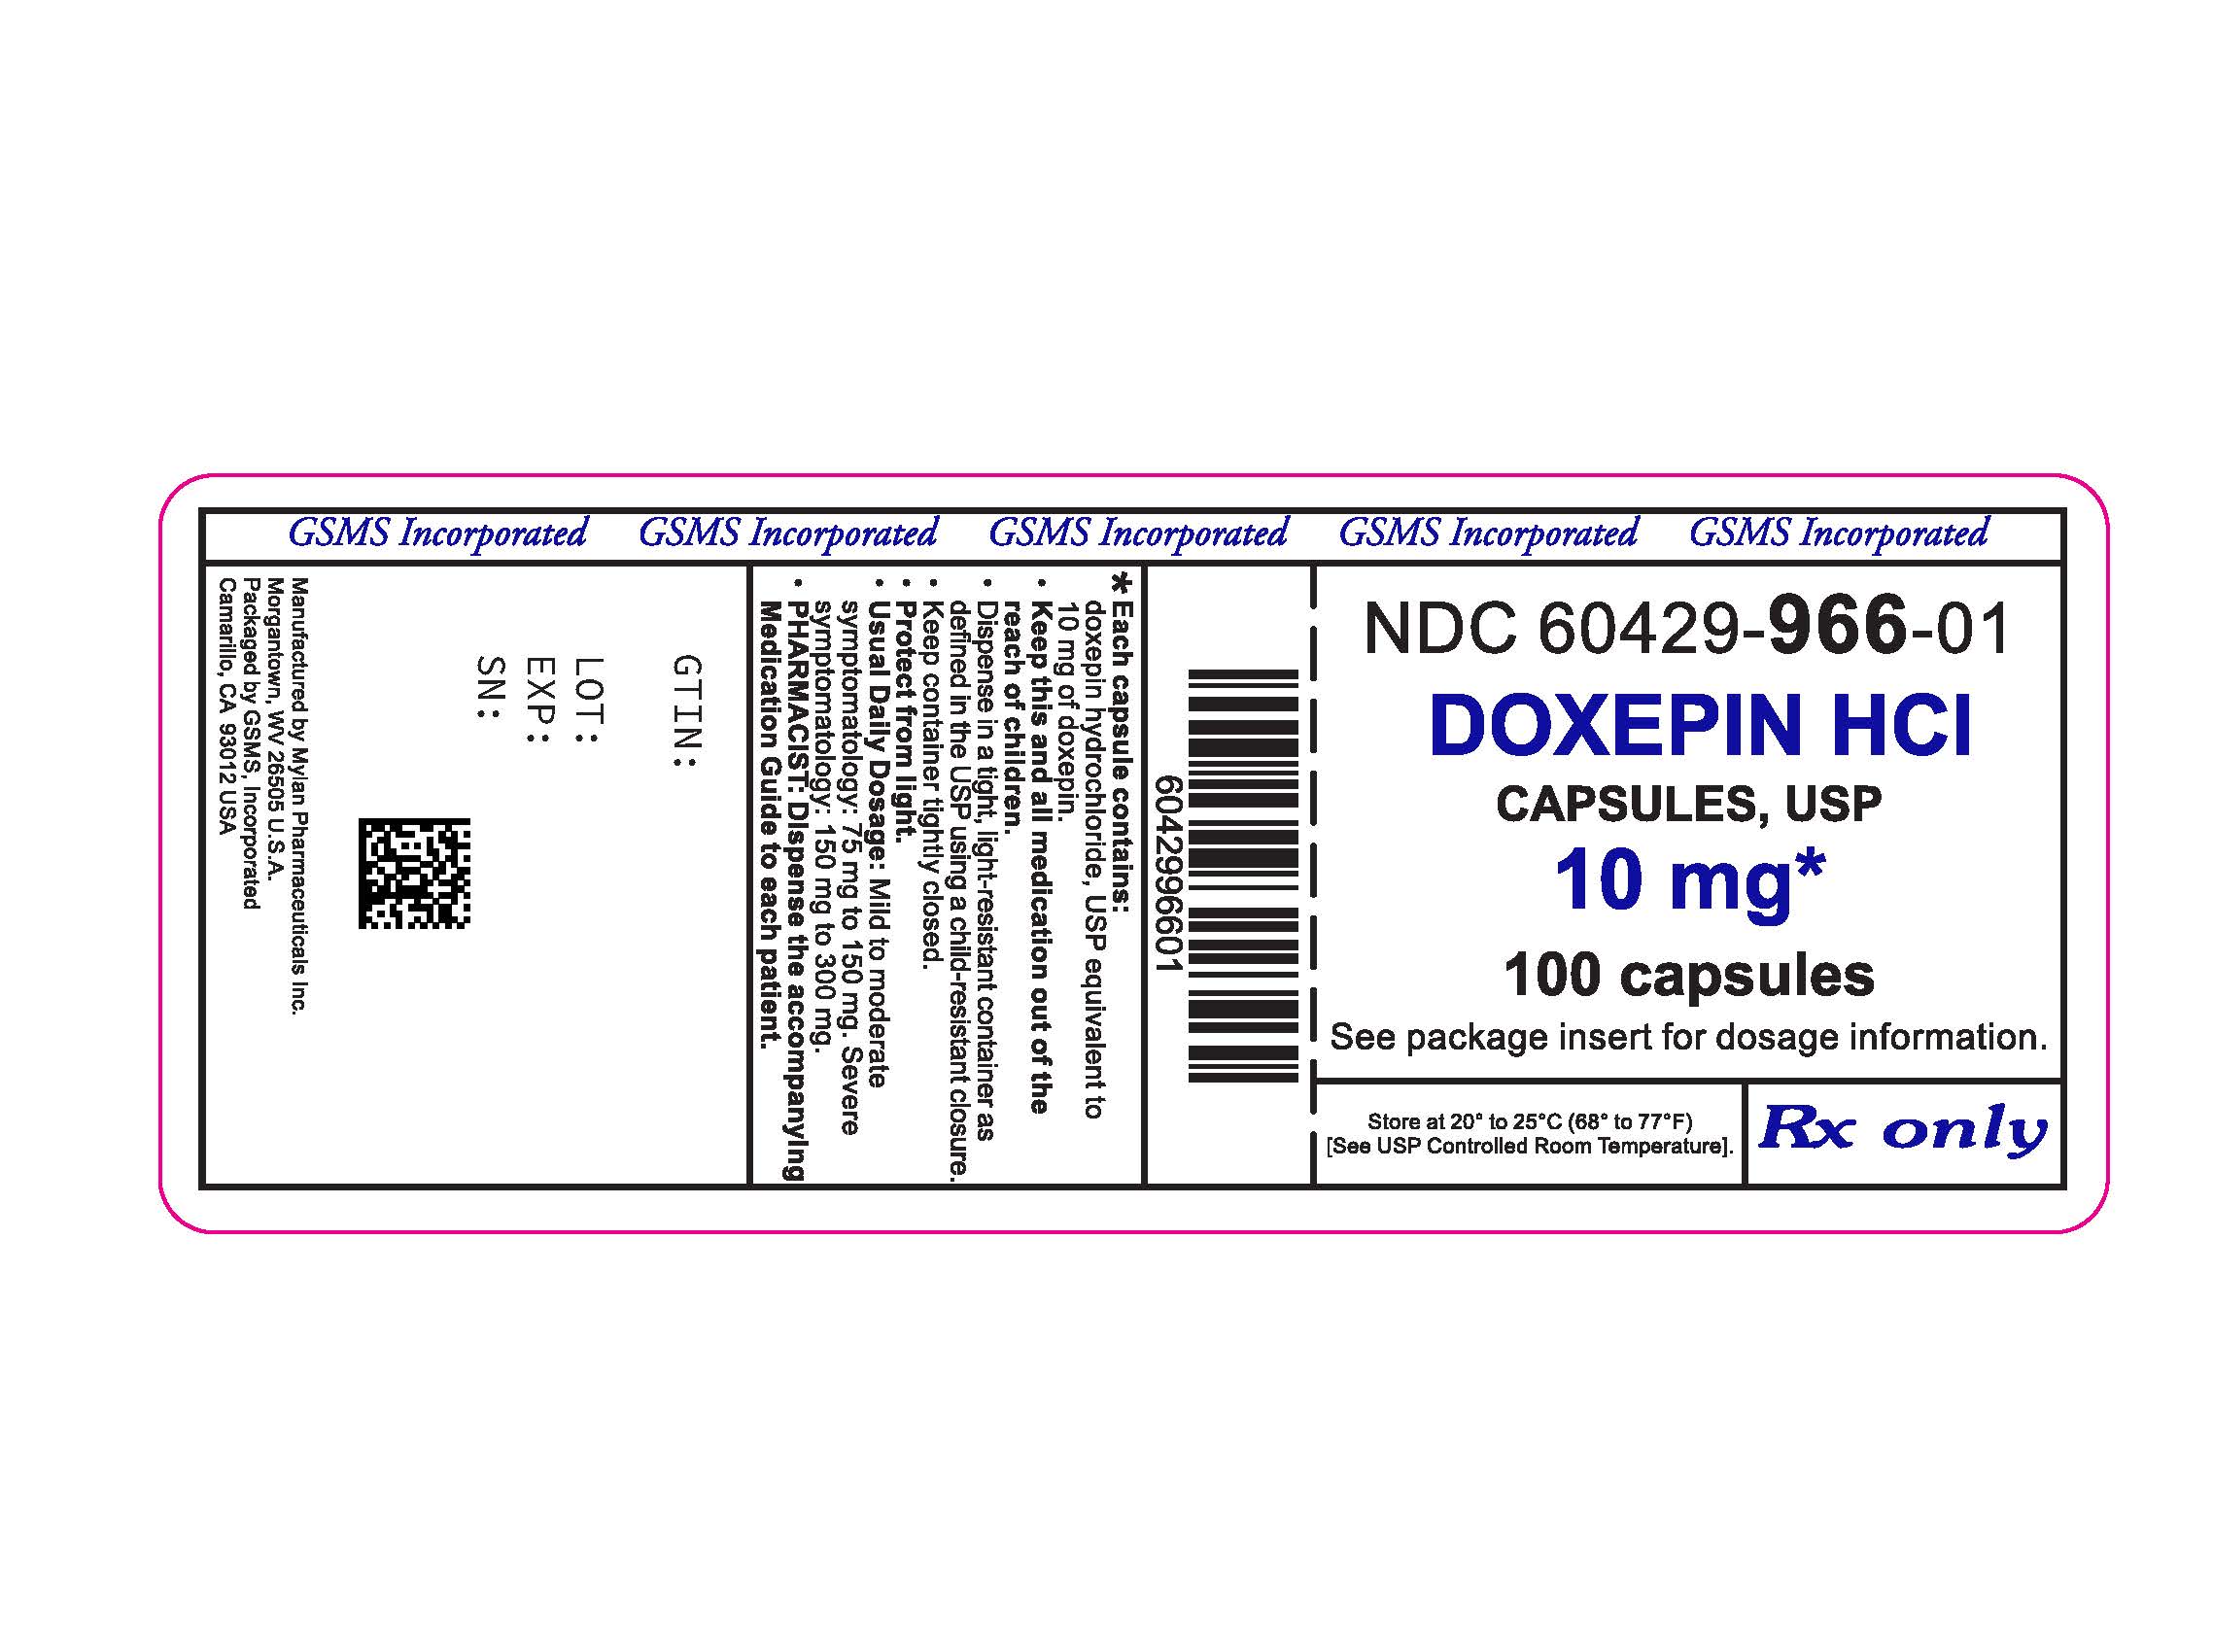 60429-966-01LB - DOXEPIN HCl 10 MG CAPS - REV JUN 2015 PMG DEC 2014.jpg